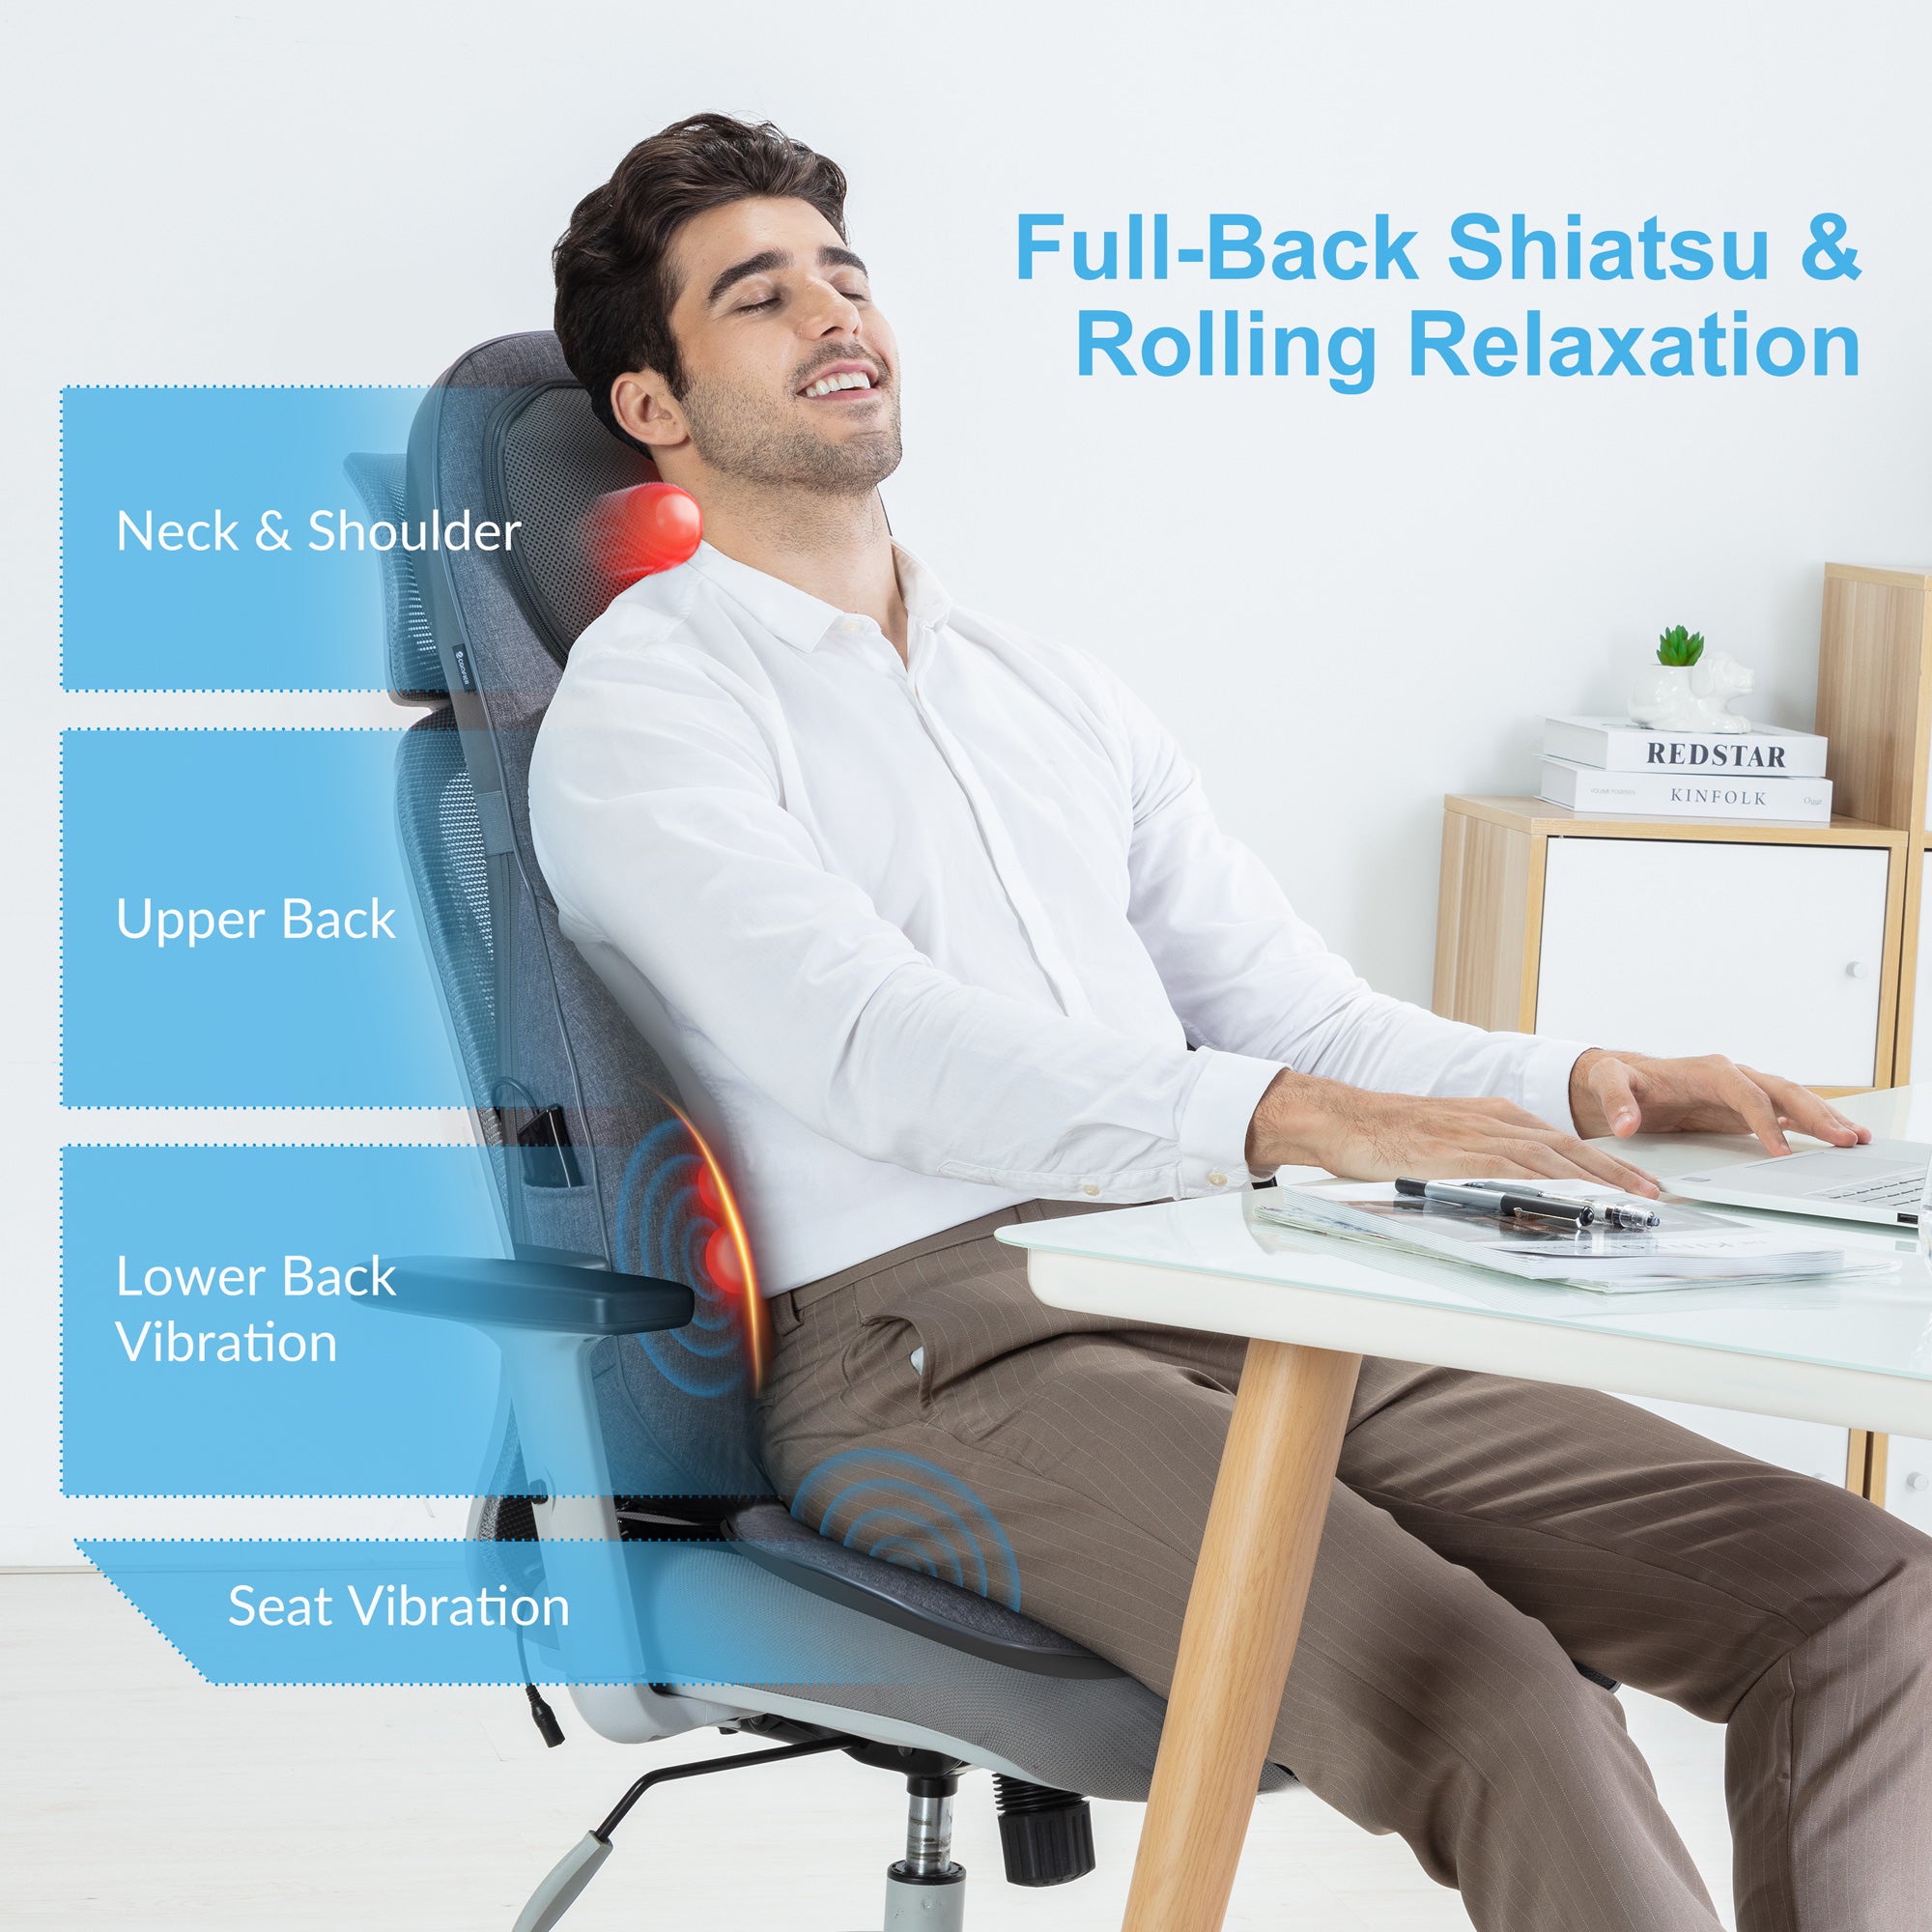 Comfier Shiatsu Neck Back Massage Seat Cushion with Heat,(Colored packaging) - CF-2113-2